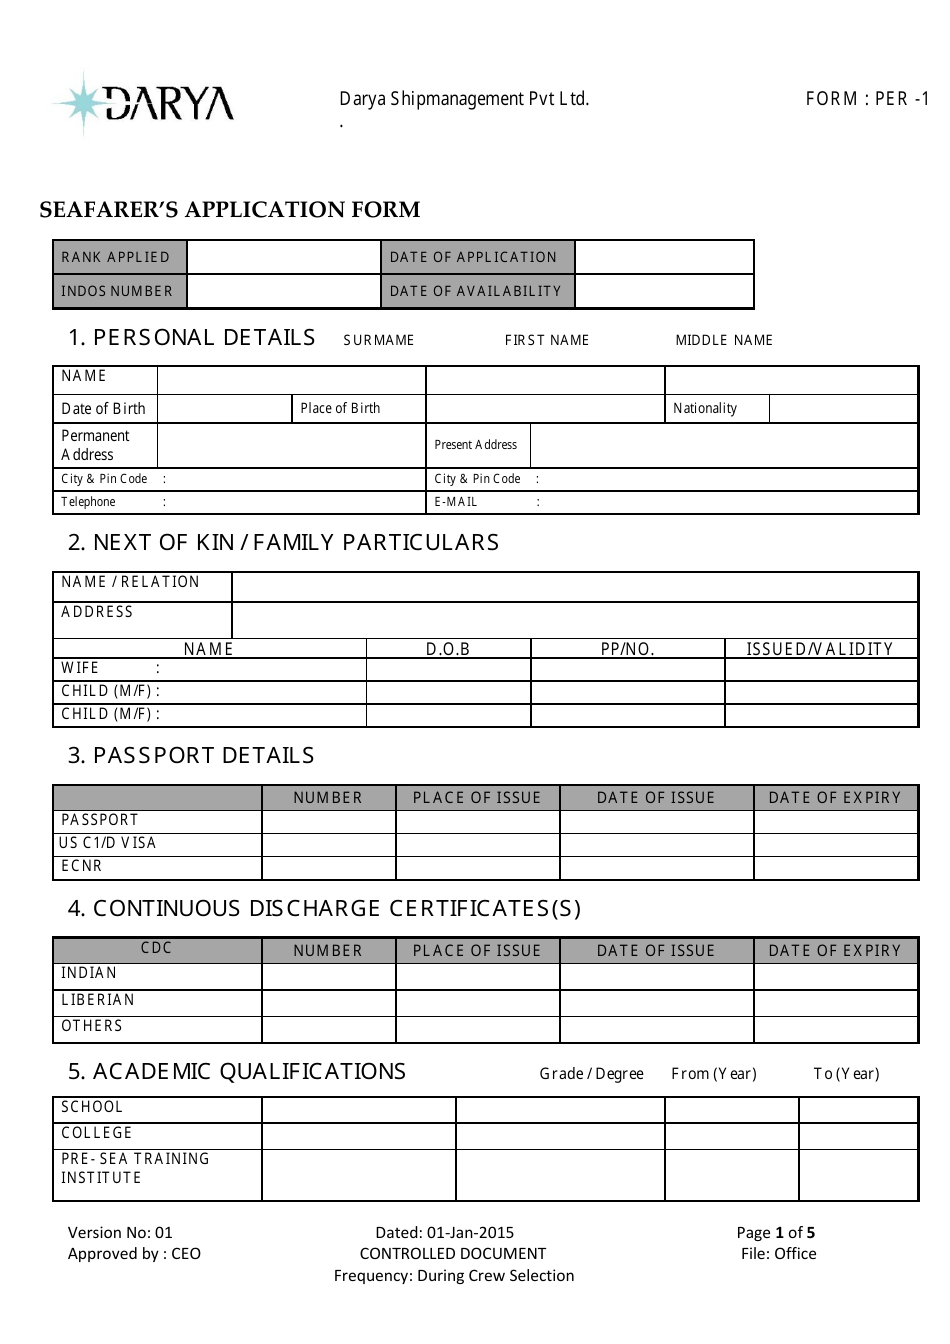 Seafarers Application Form - Darya Shipmanagement, Page 1